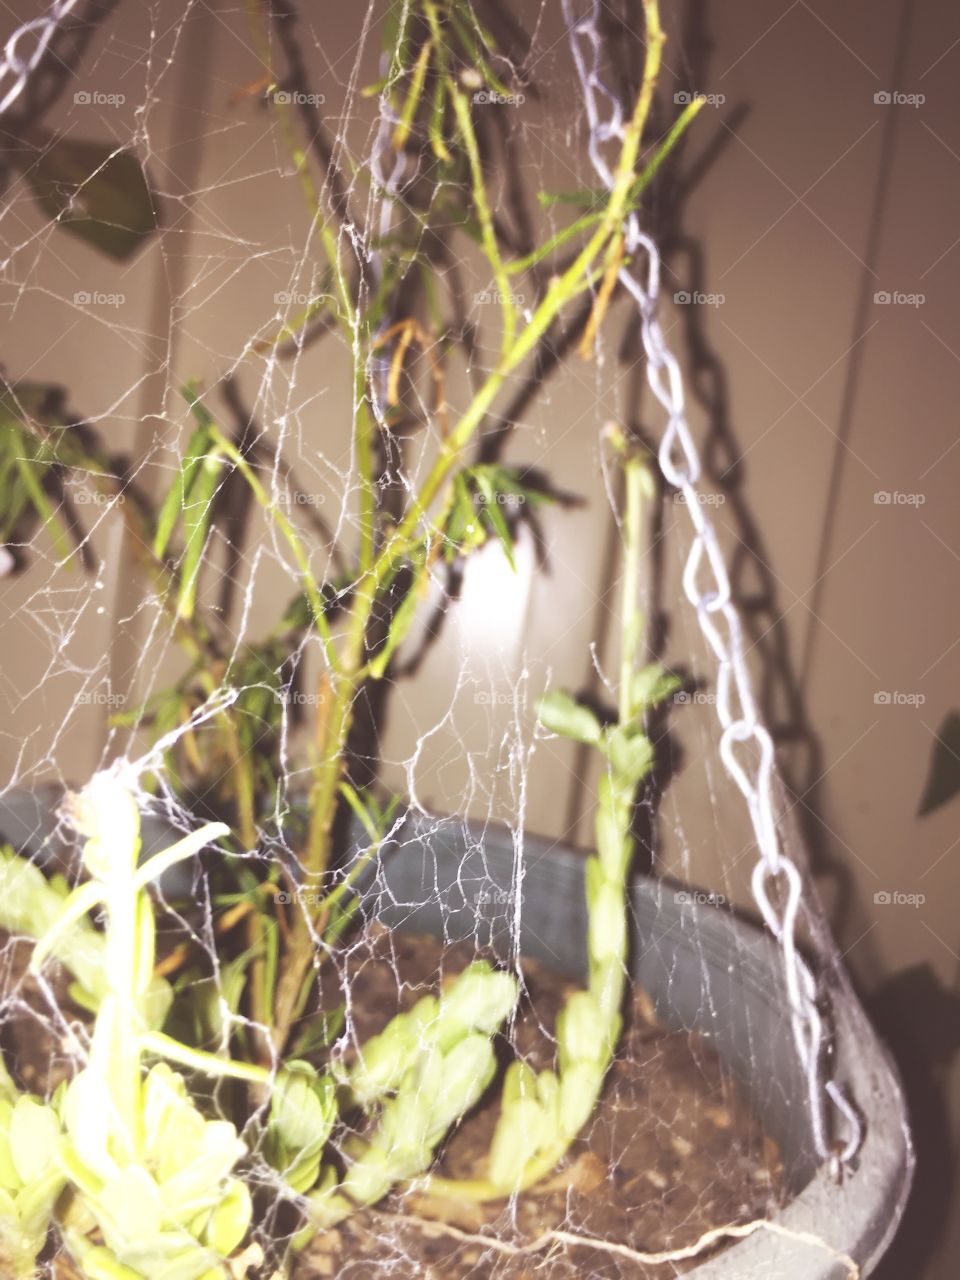 Web on plants